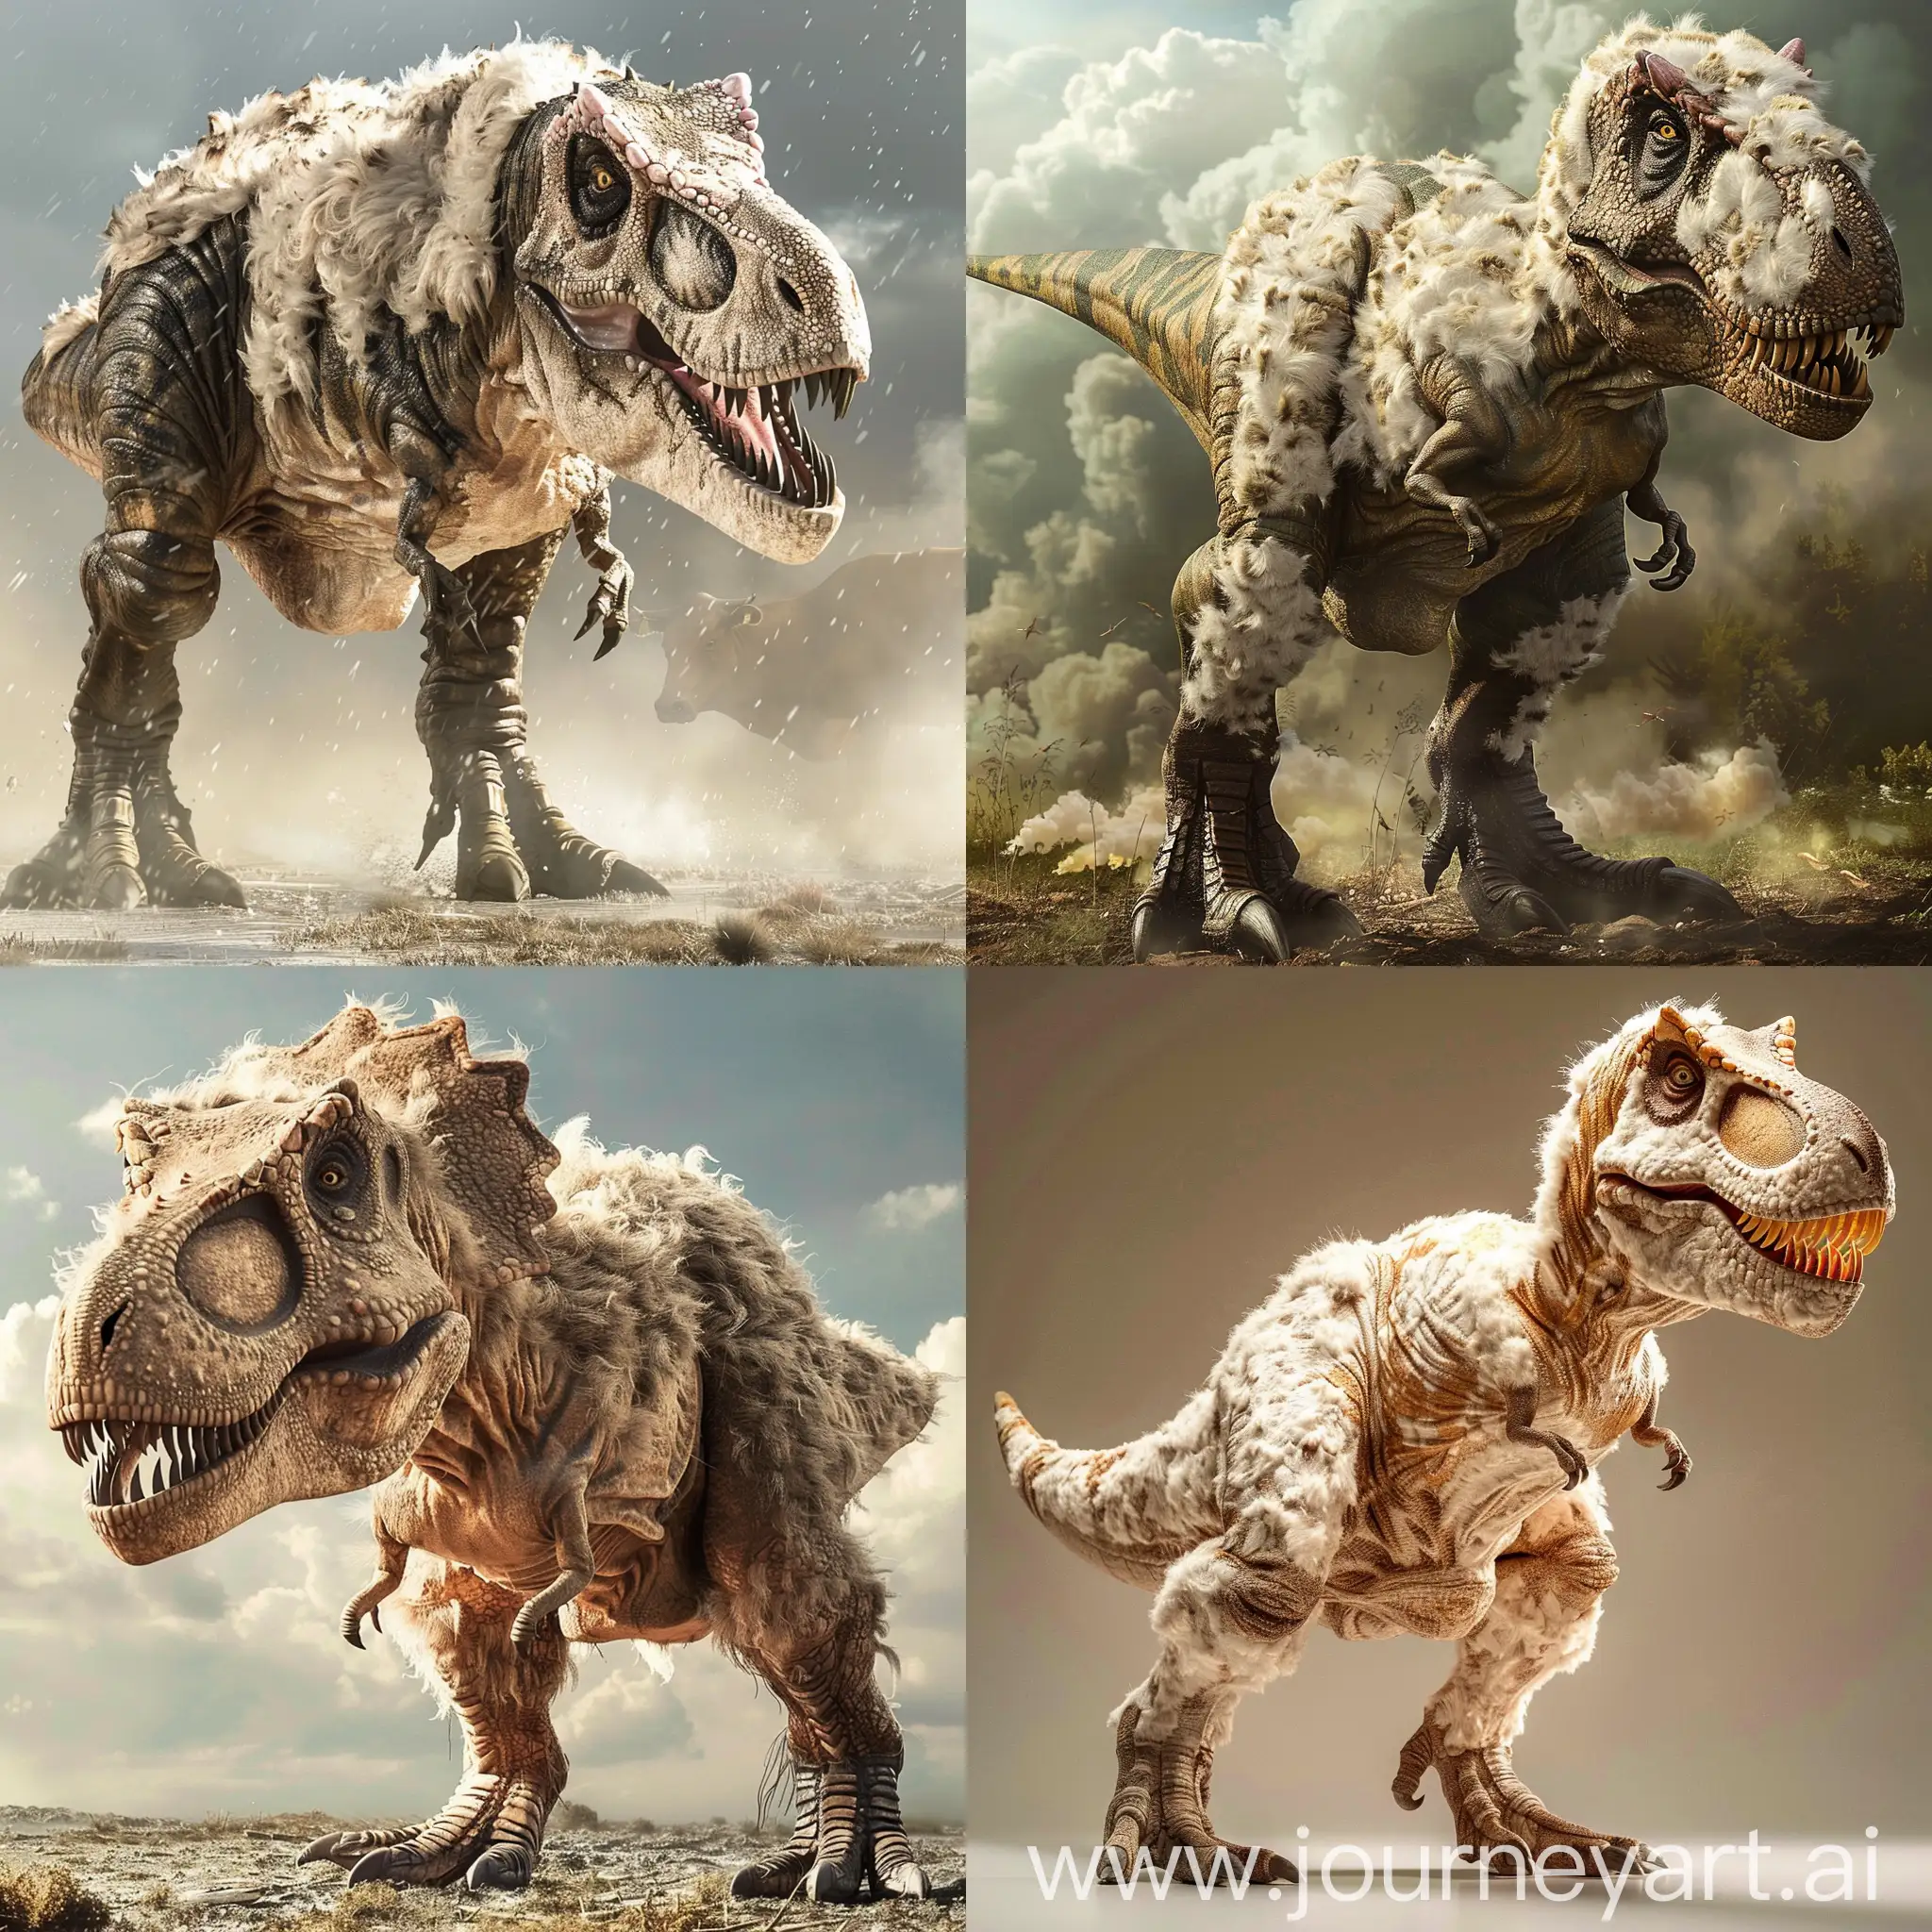 Furry-TRex-Prehistoric-Creature-with-Cowlike-Skin